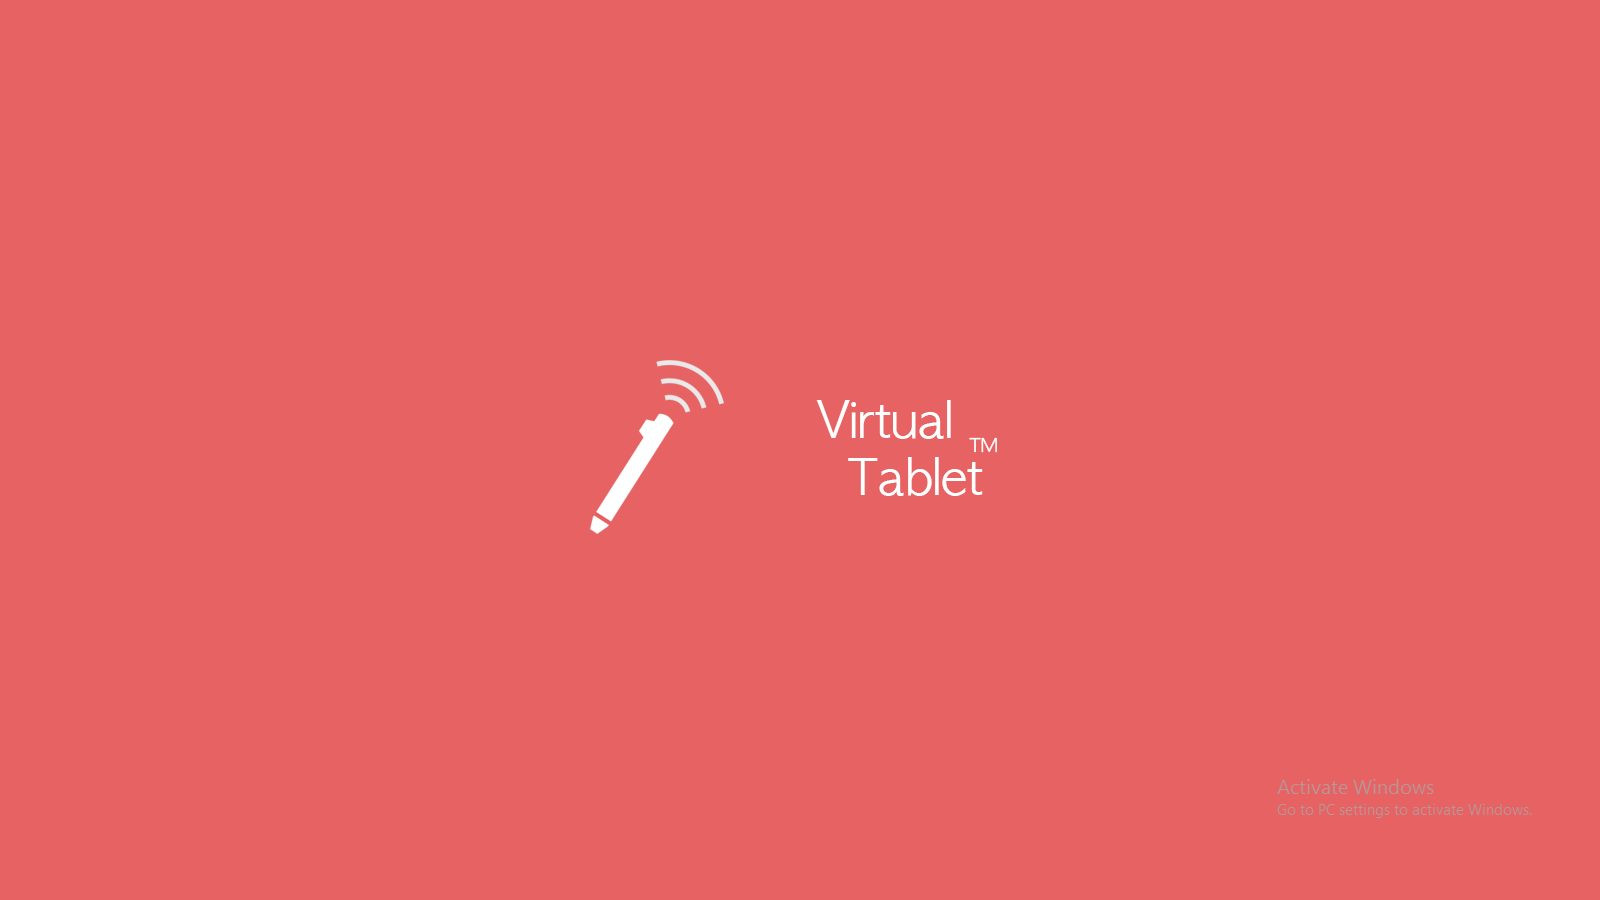 Launching Virtual Tablet